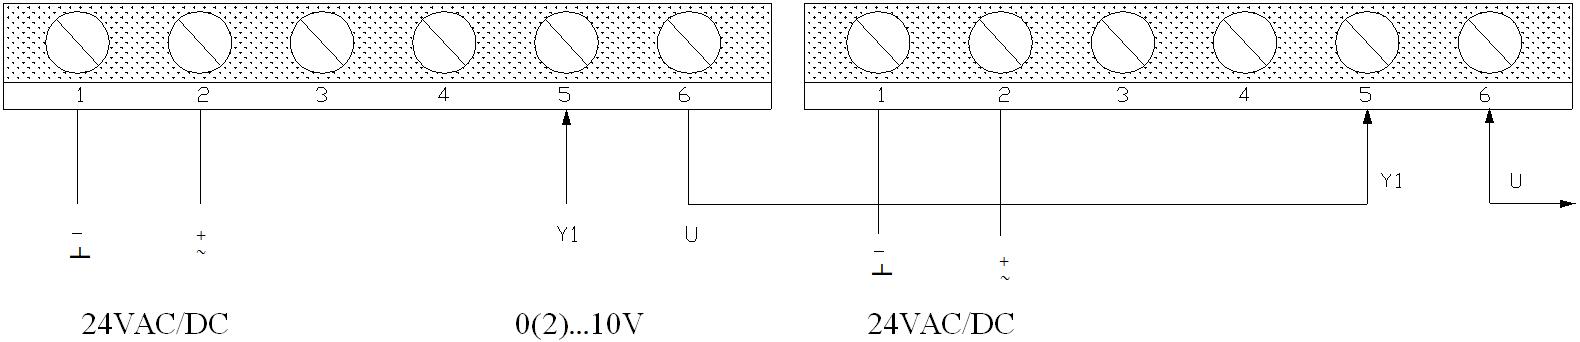 s6016-08-16-modulating-rapid-running-damper-actuator-4